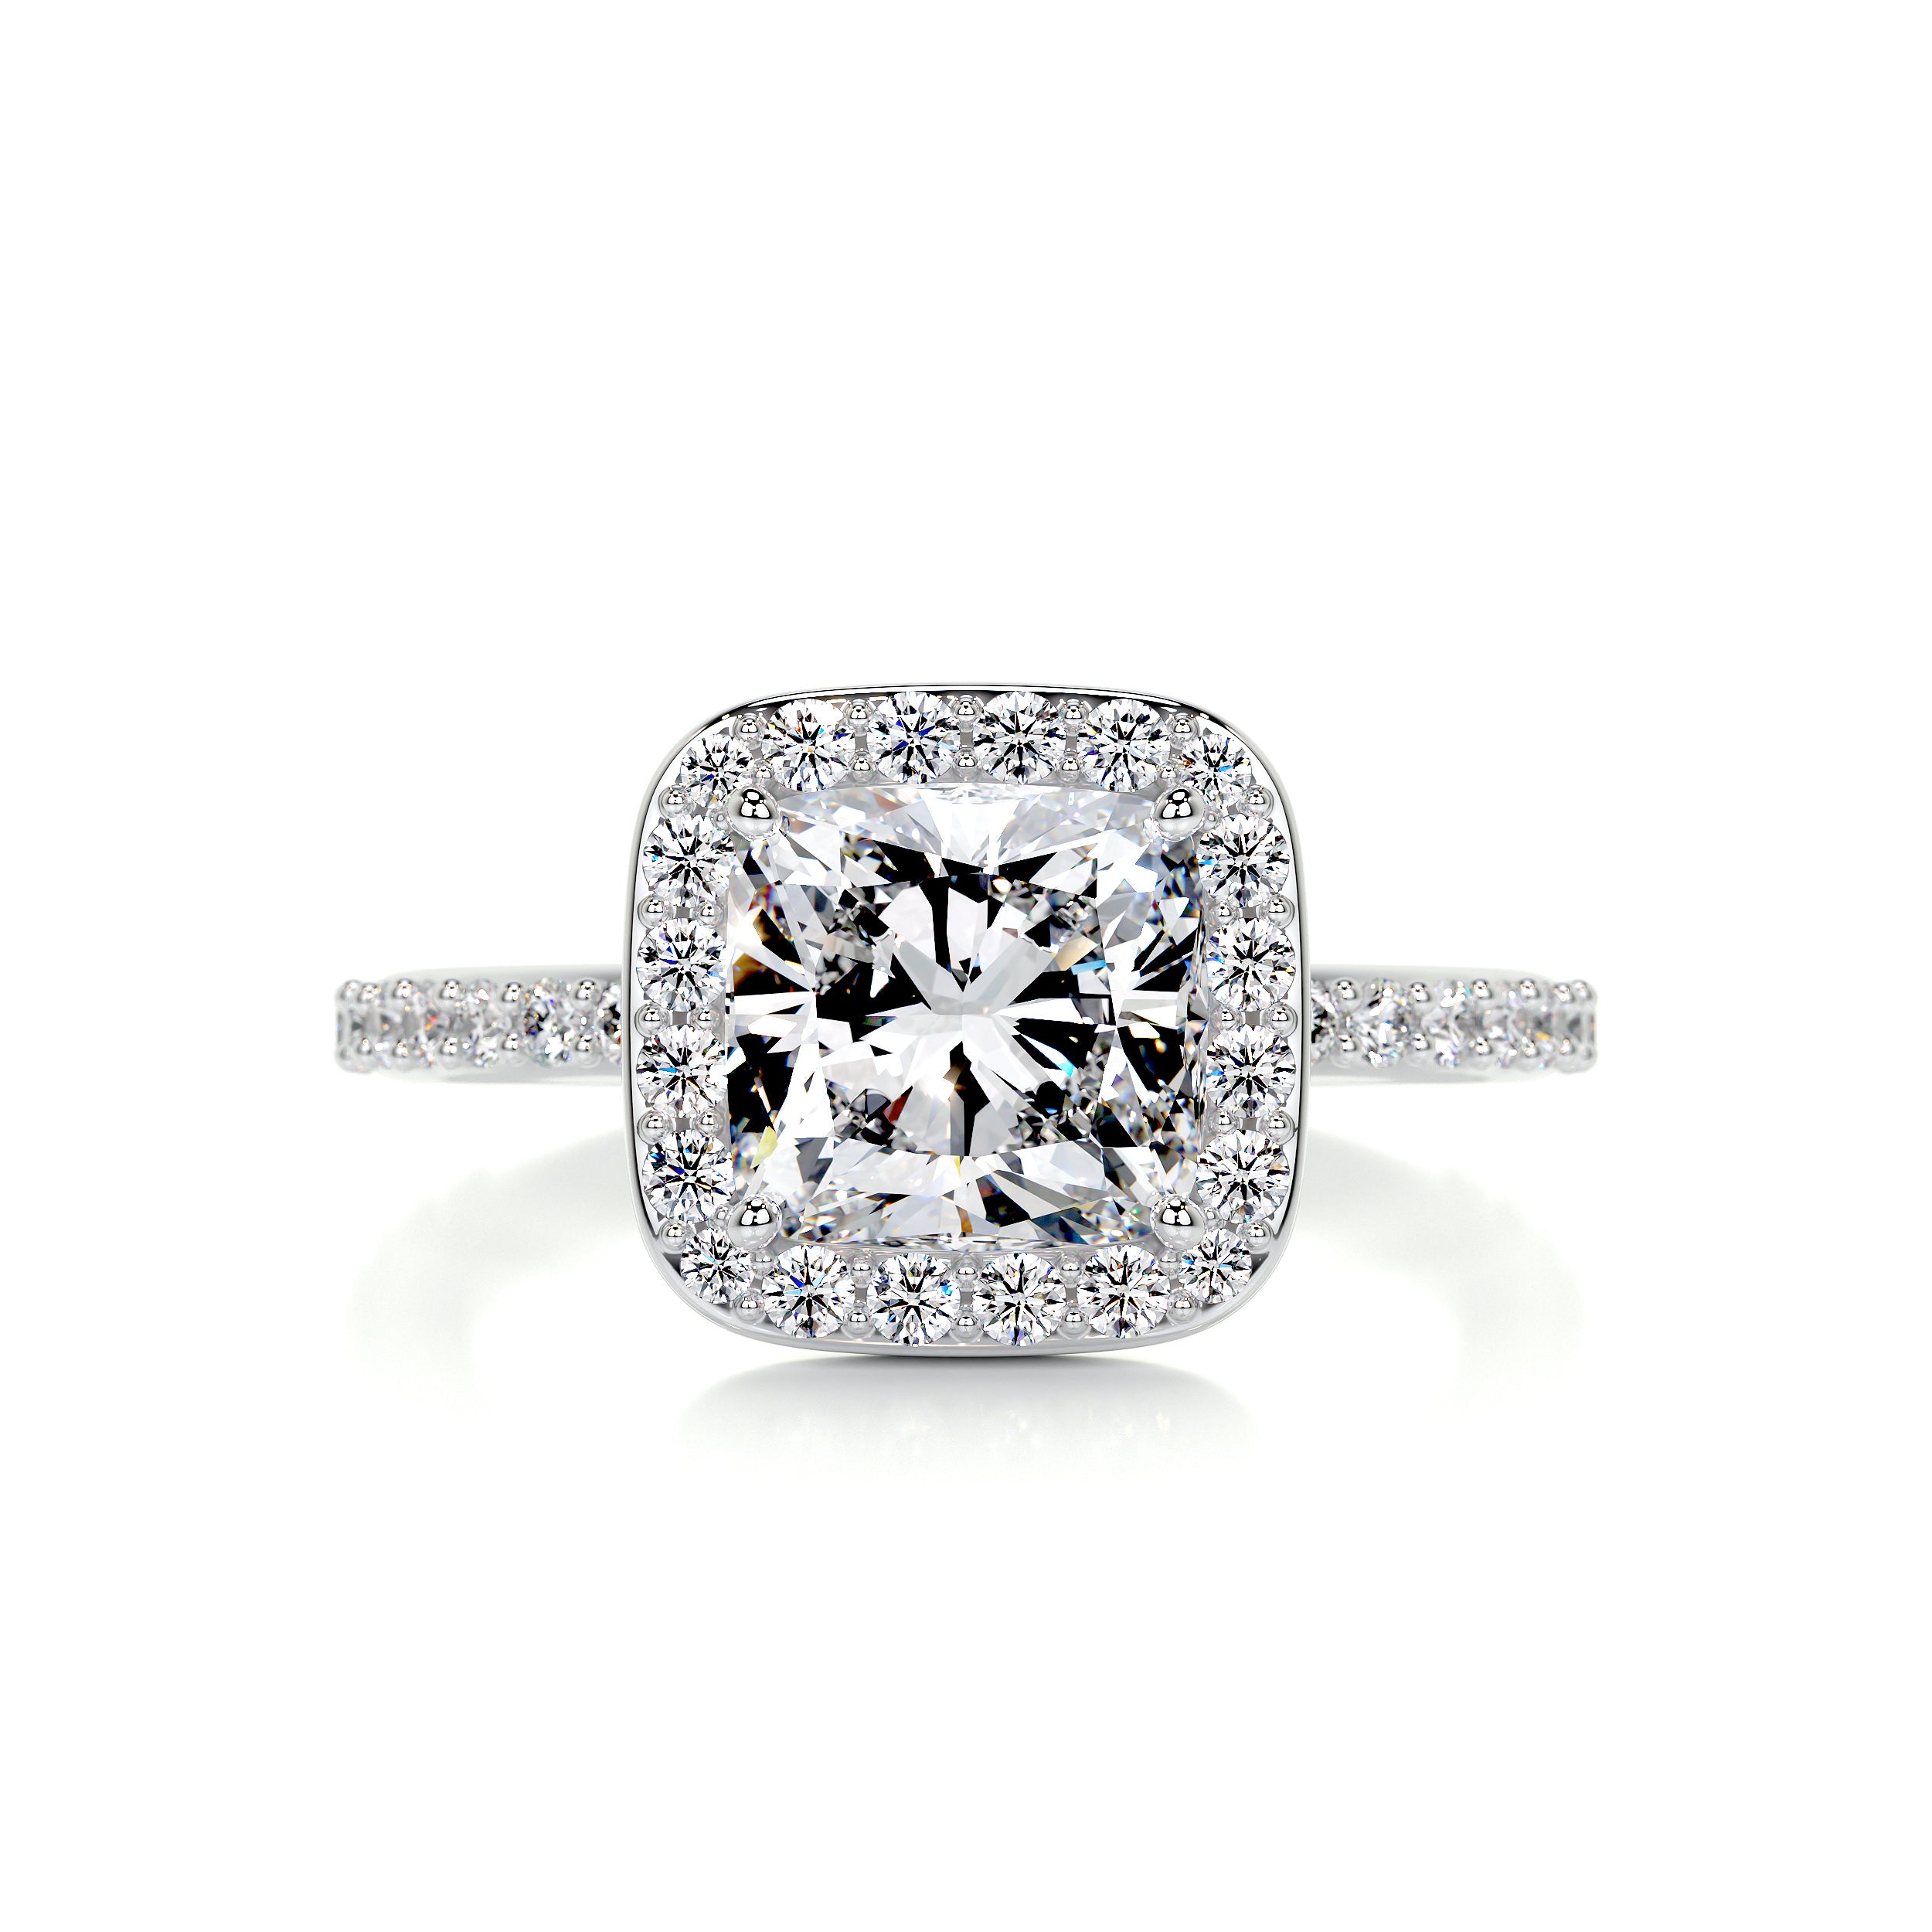 Paula Diamond Engagement Ring   (2.70 Carat) -Platinum